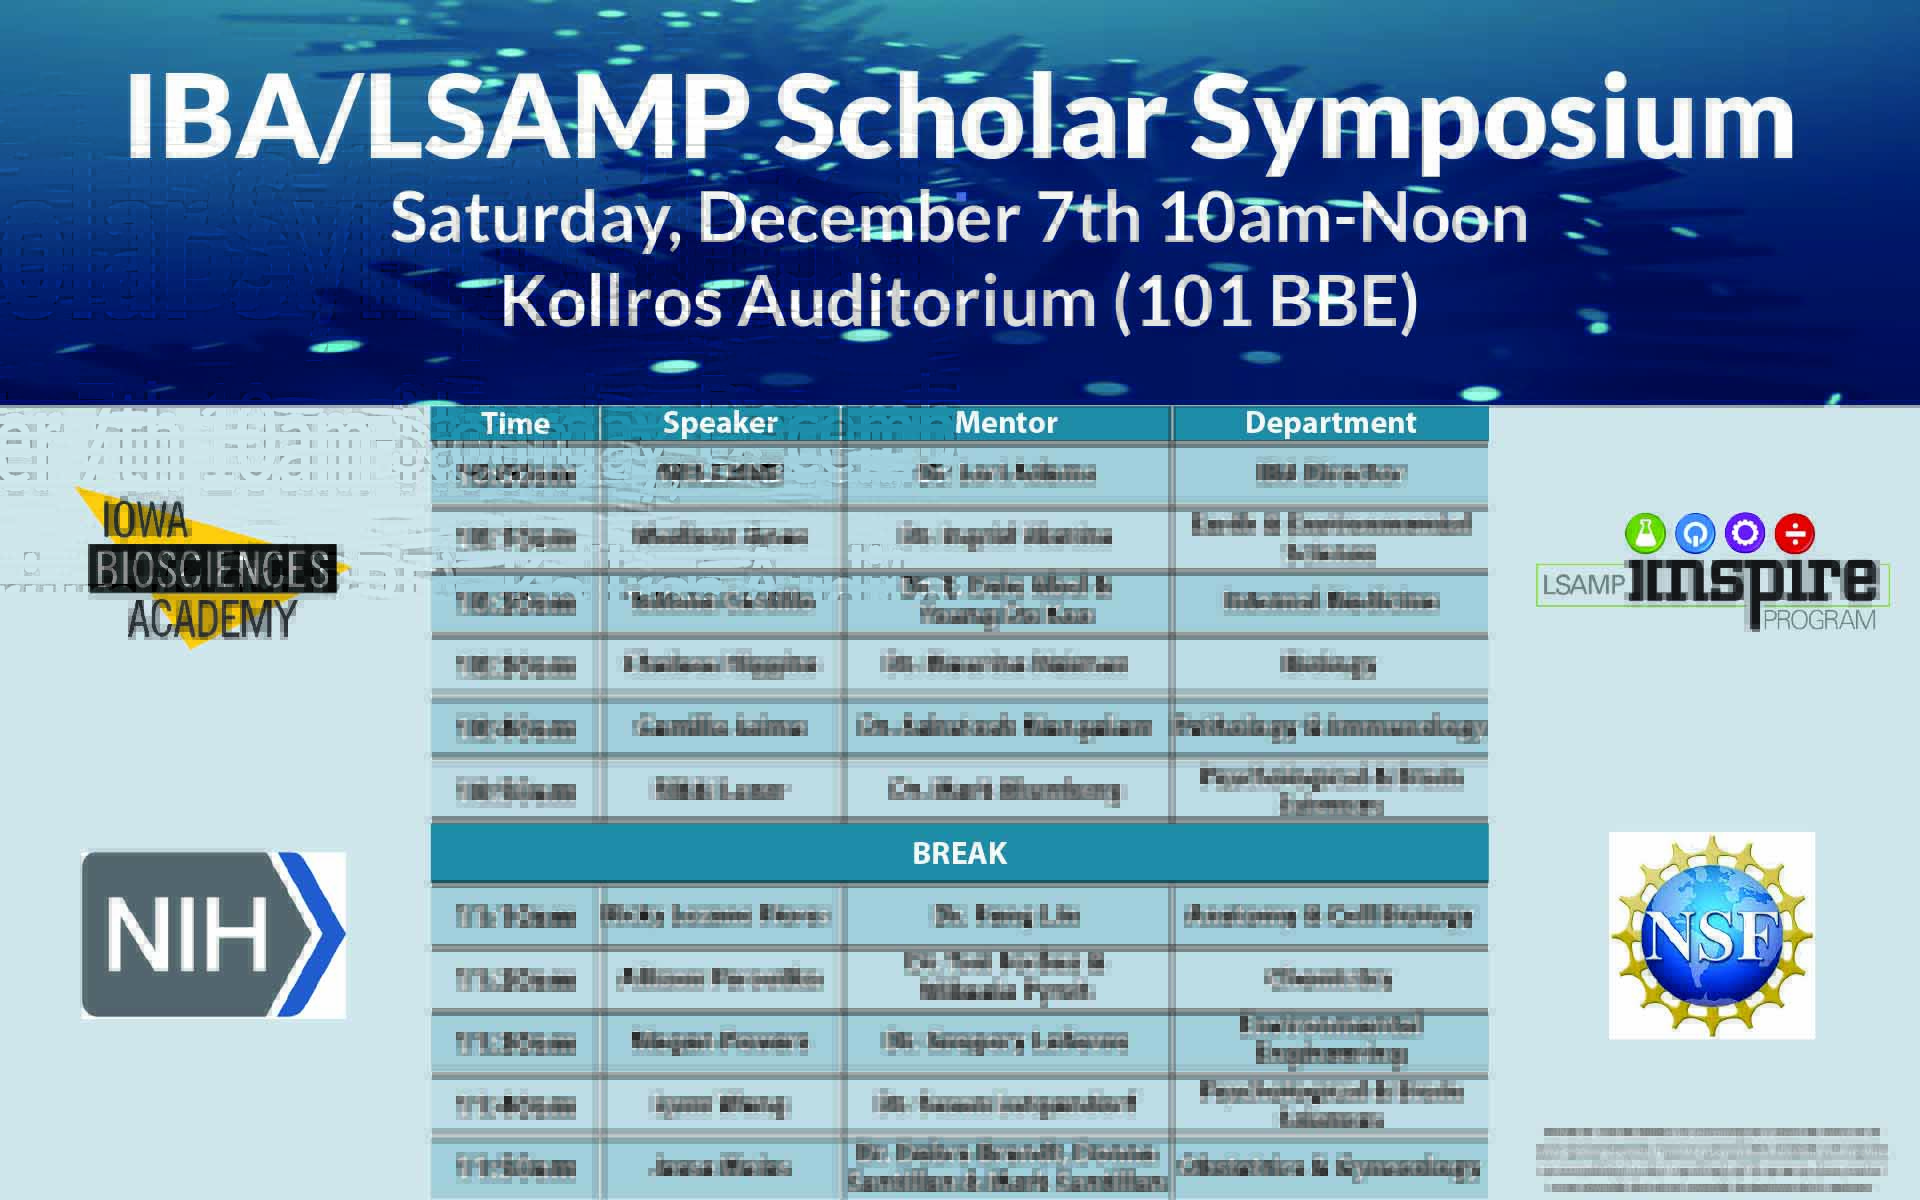 IBA/LSAMP Scholar Symposium, Saturday, December 7th, 2019 from 10am - Noon. Kollros Auditorium (101 BBE).